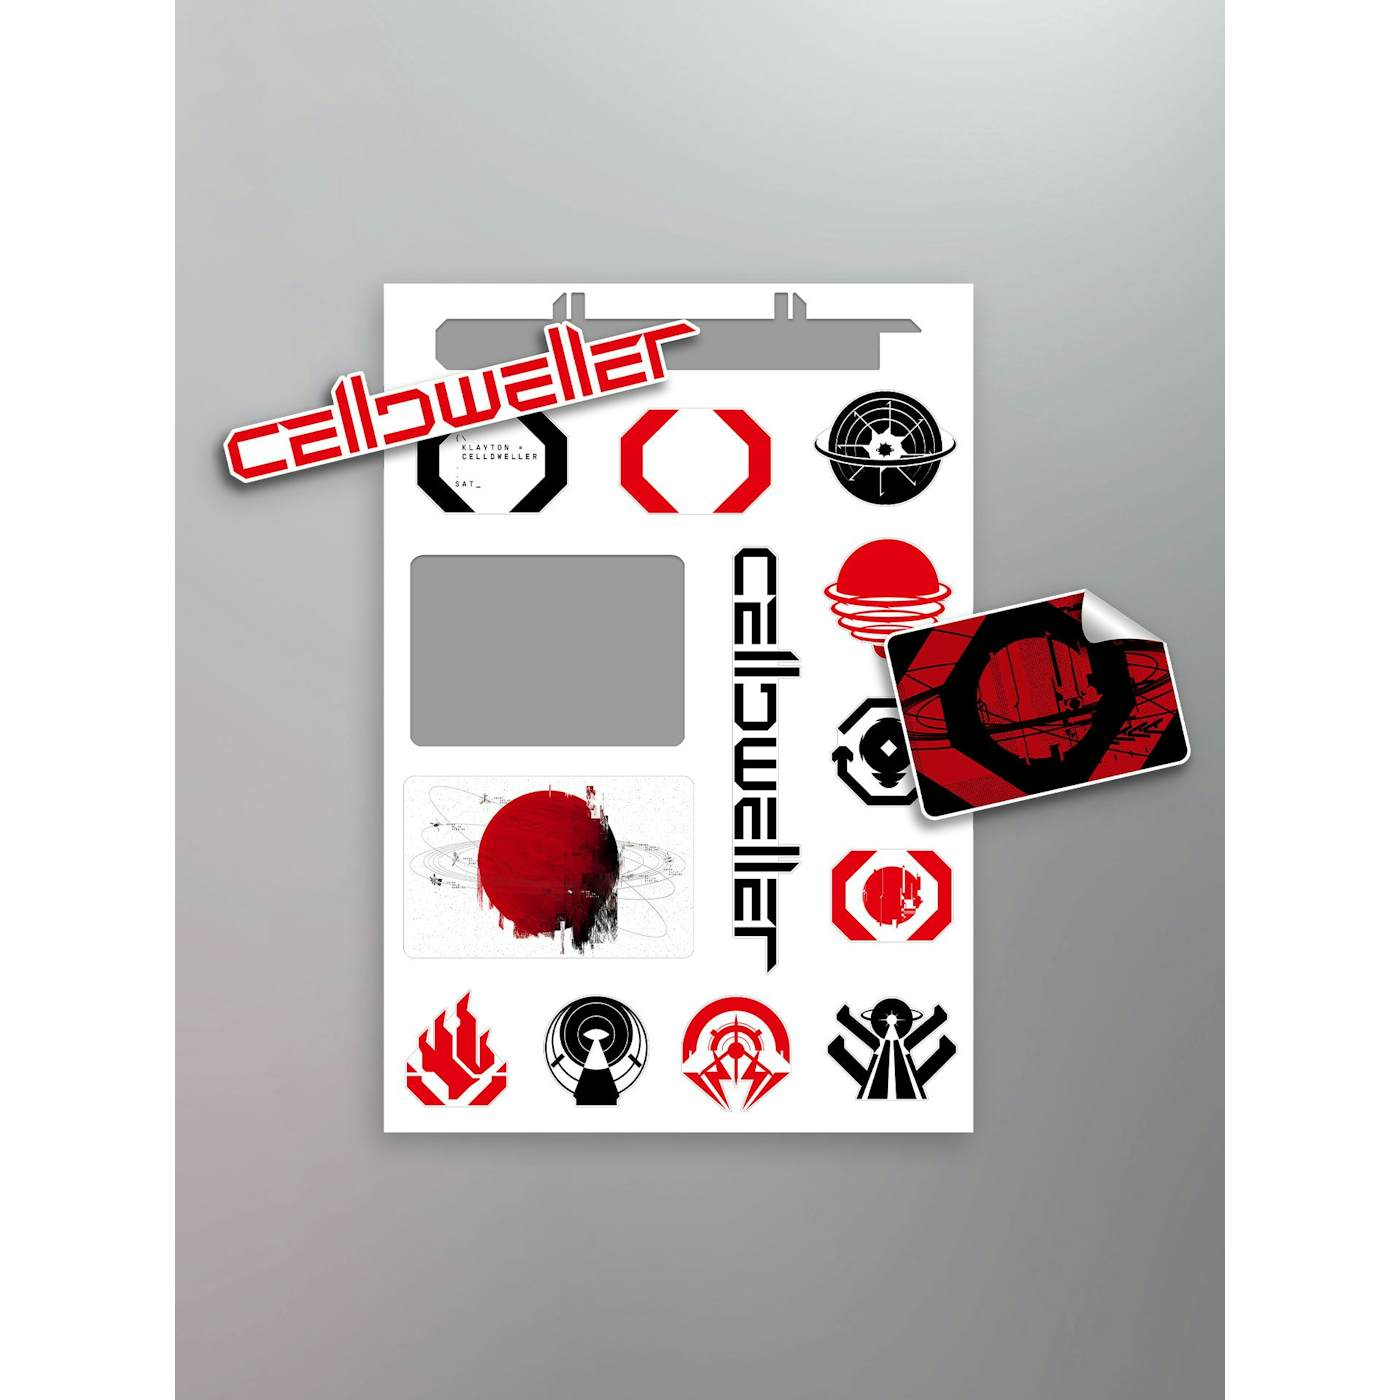 Celldweller - Satellites Sticker Sheet